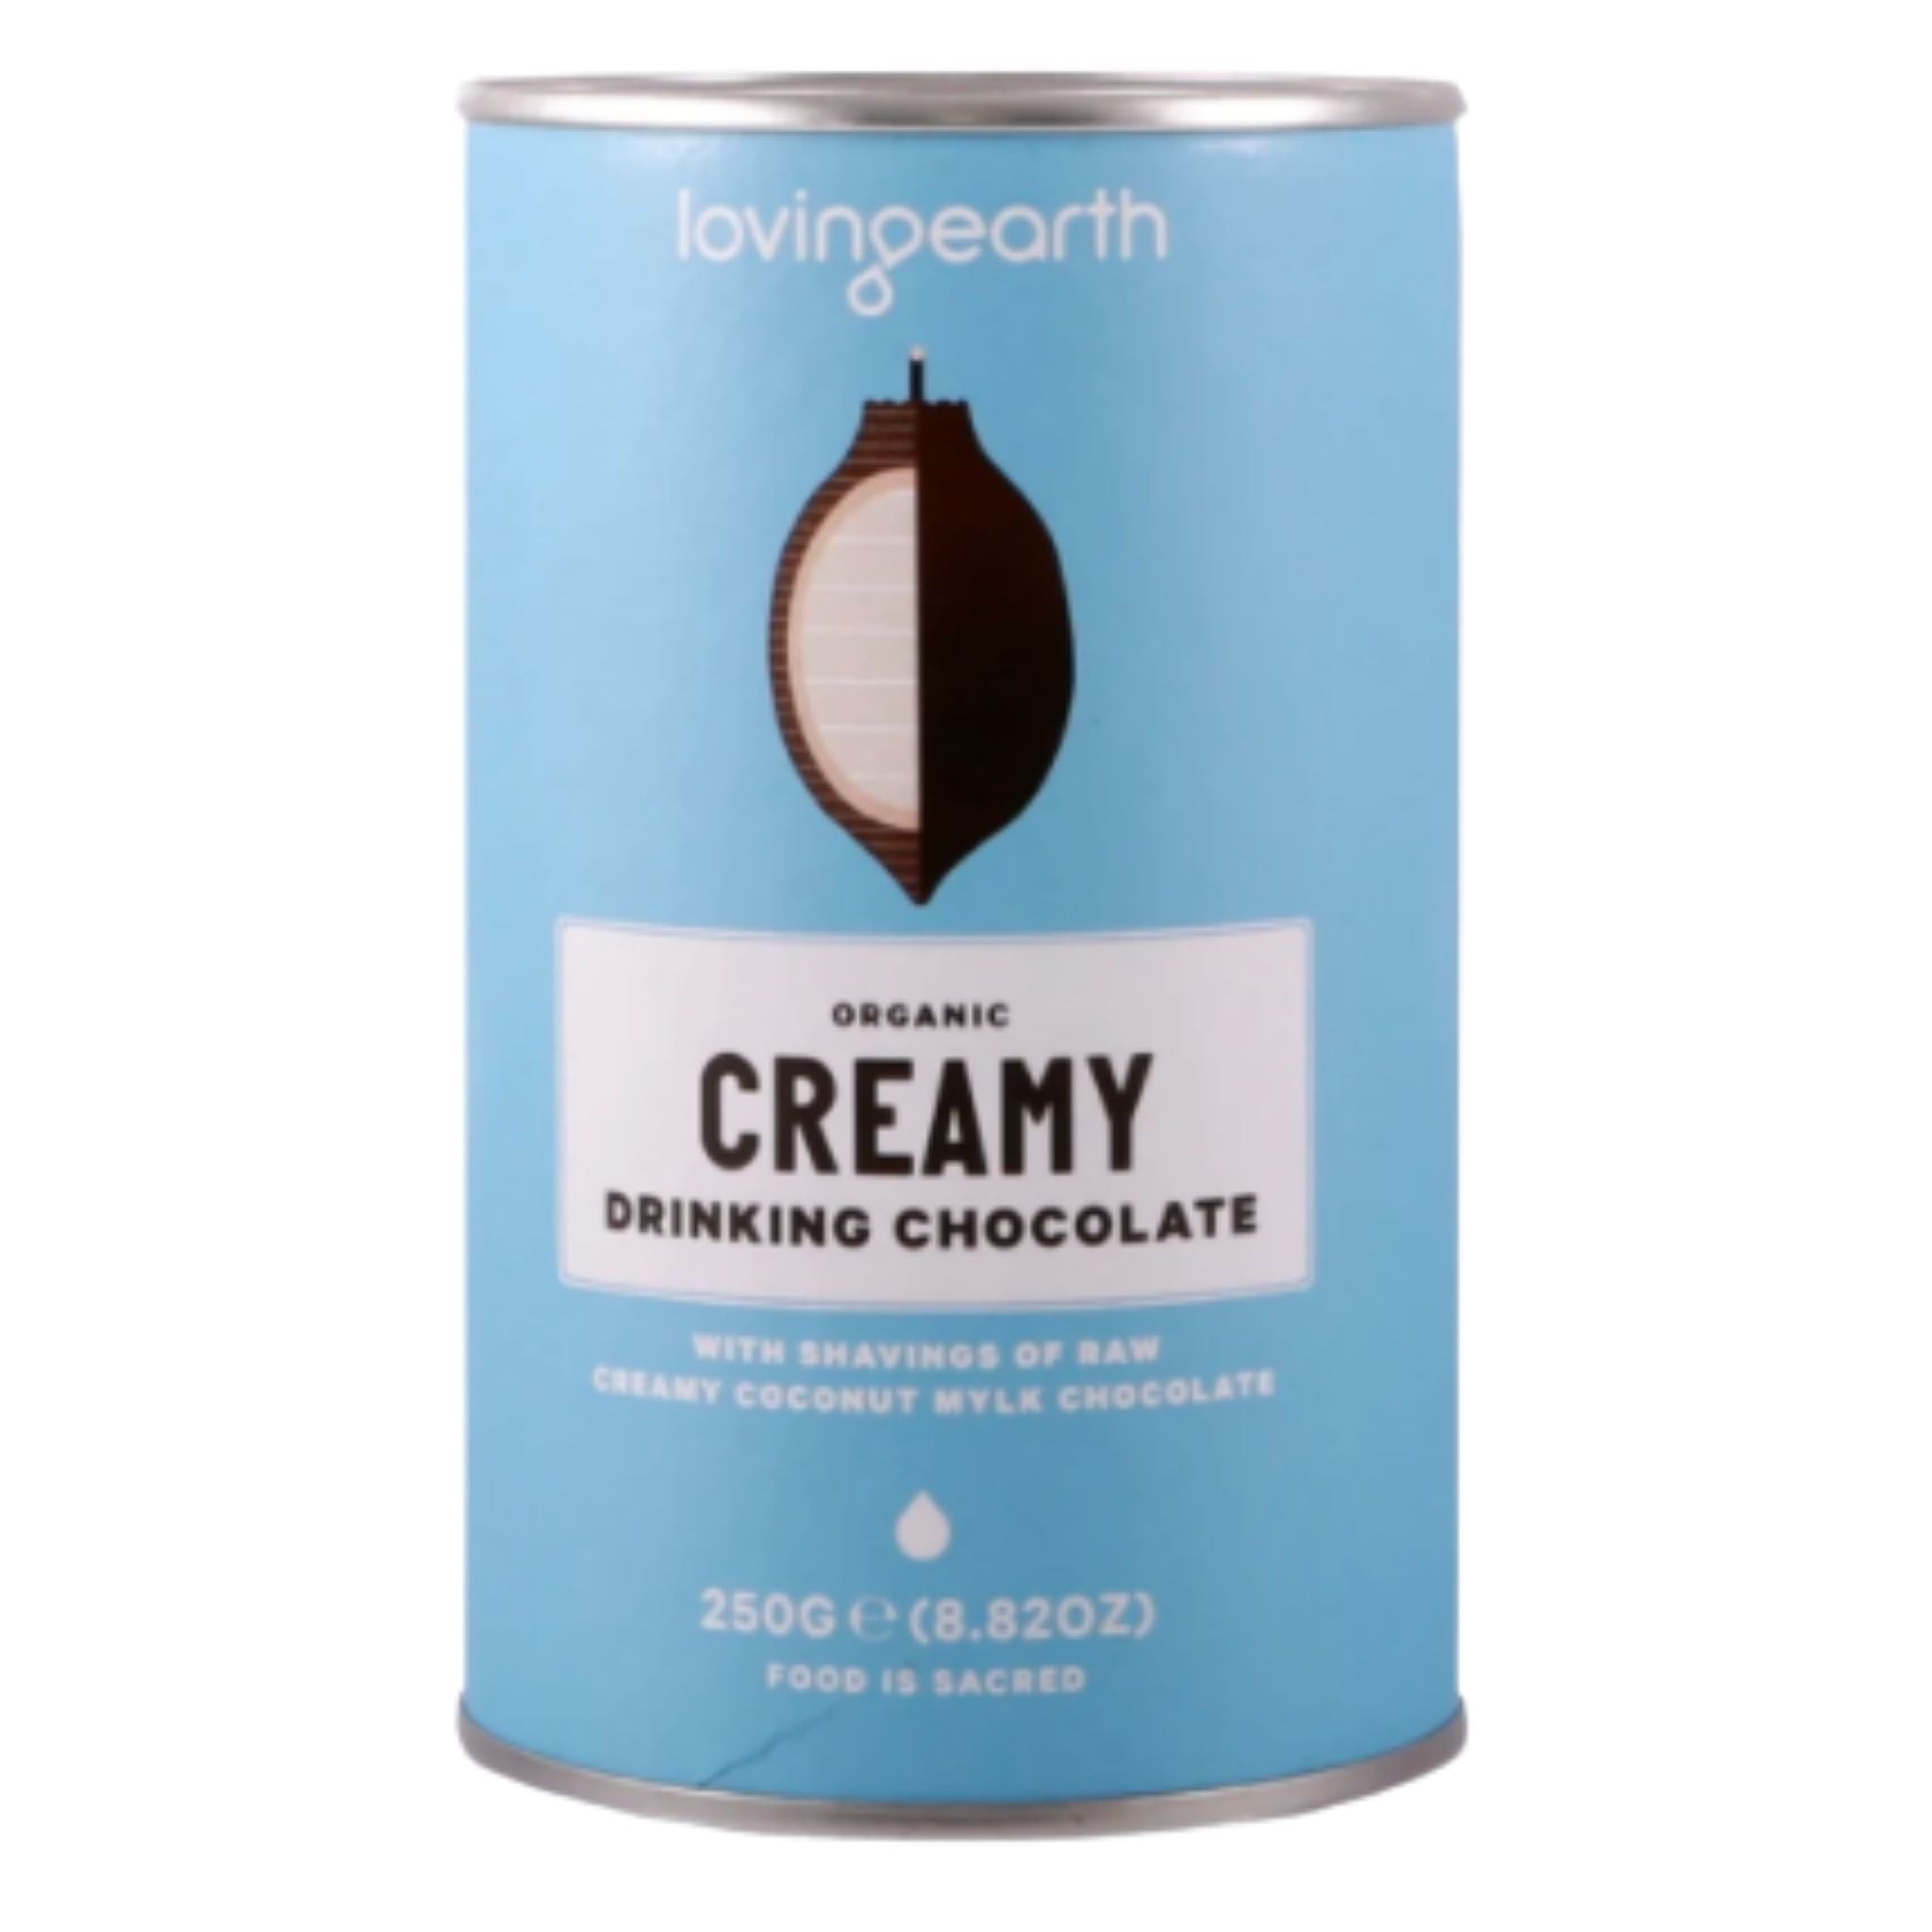 Creamy Drinking Chocolate (Organic) - Loving Earth. 250gr